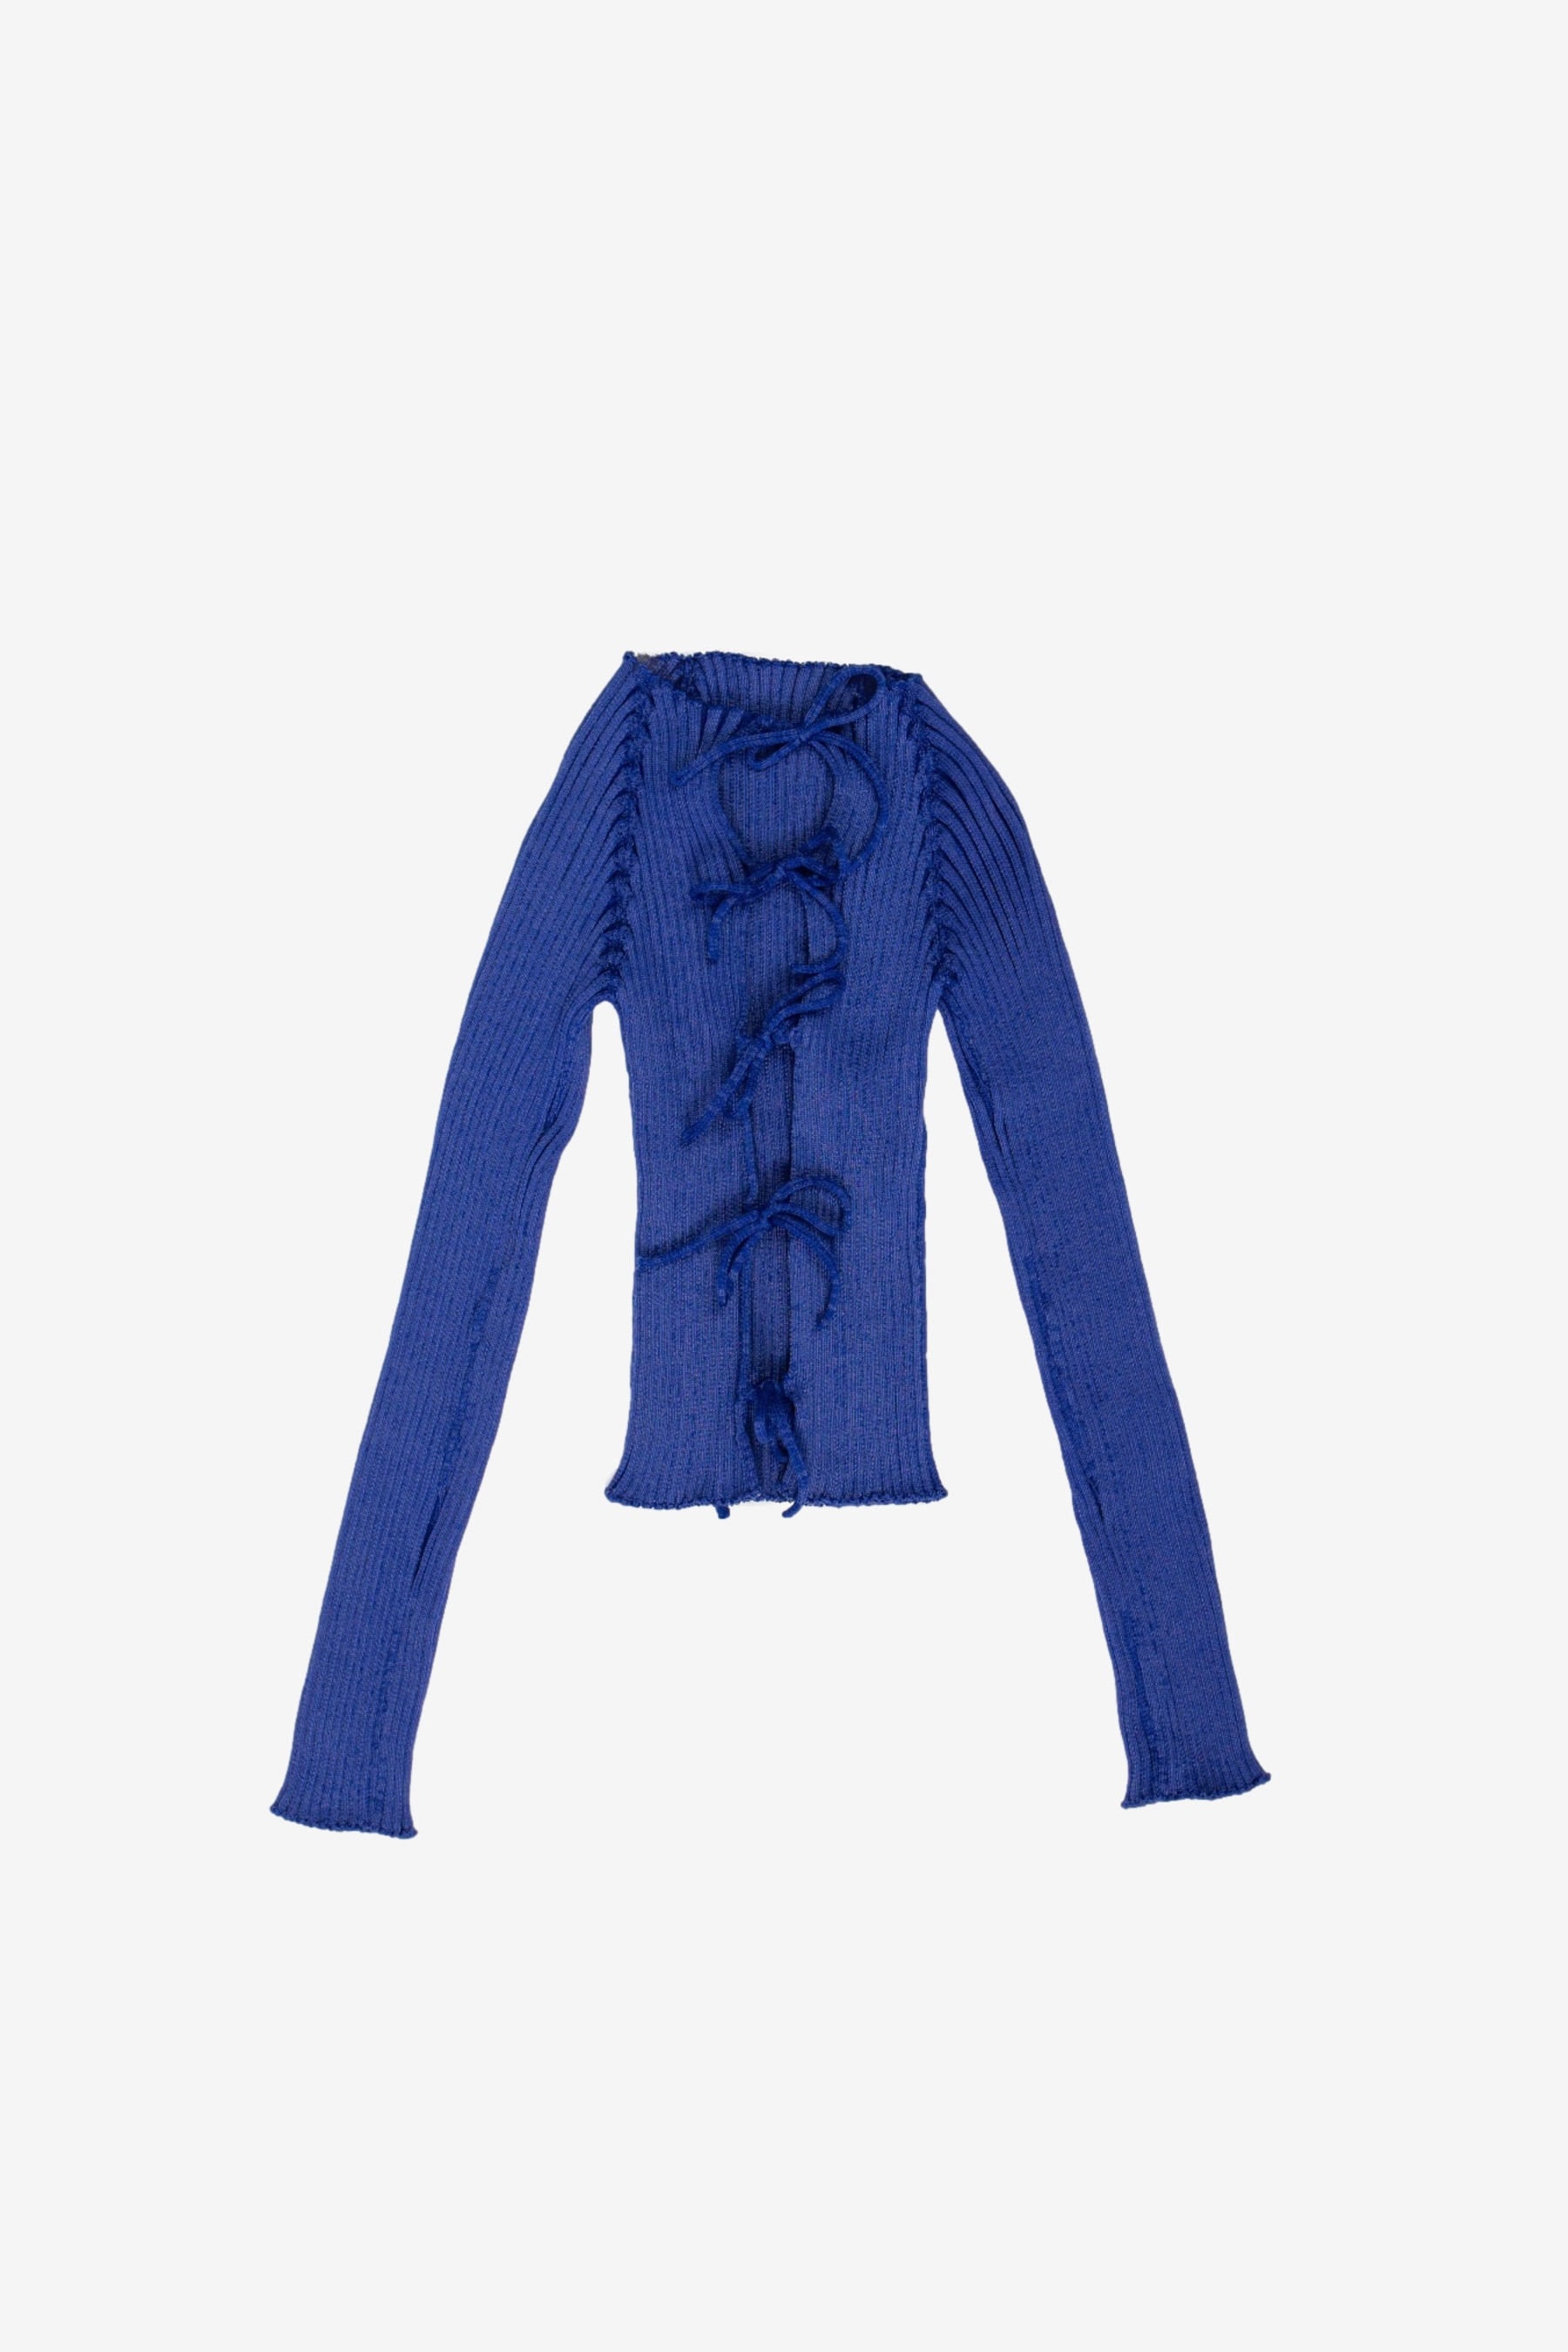 Emma String Cardigan in Cobalt Blue - A Roege Hove | Afura Store